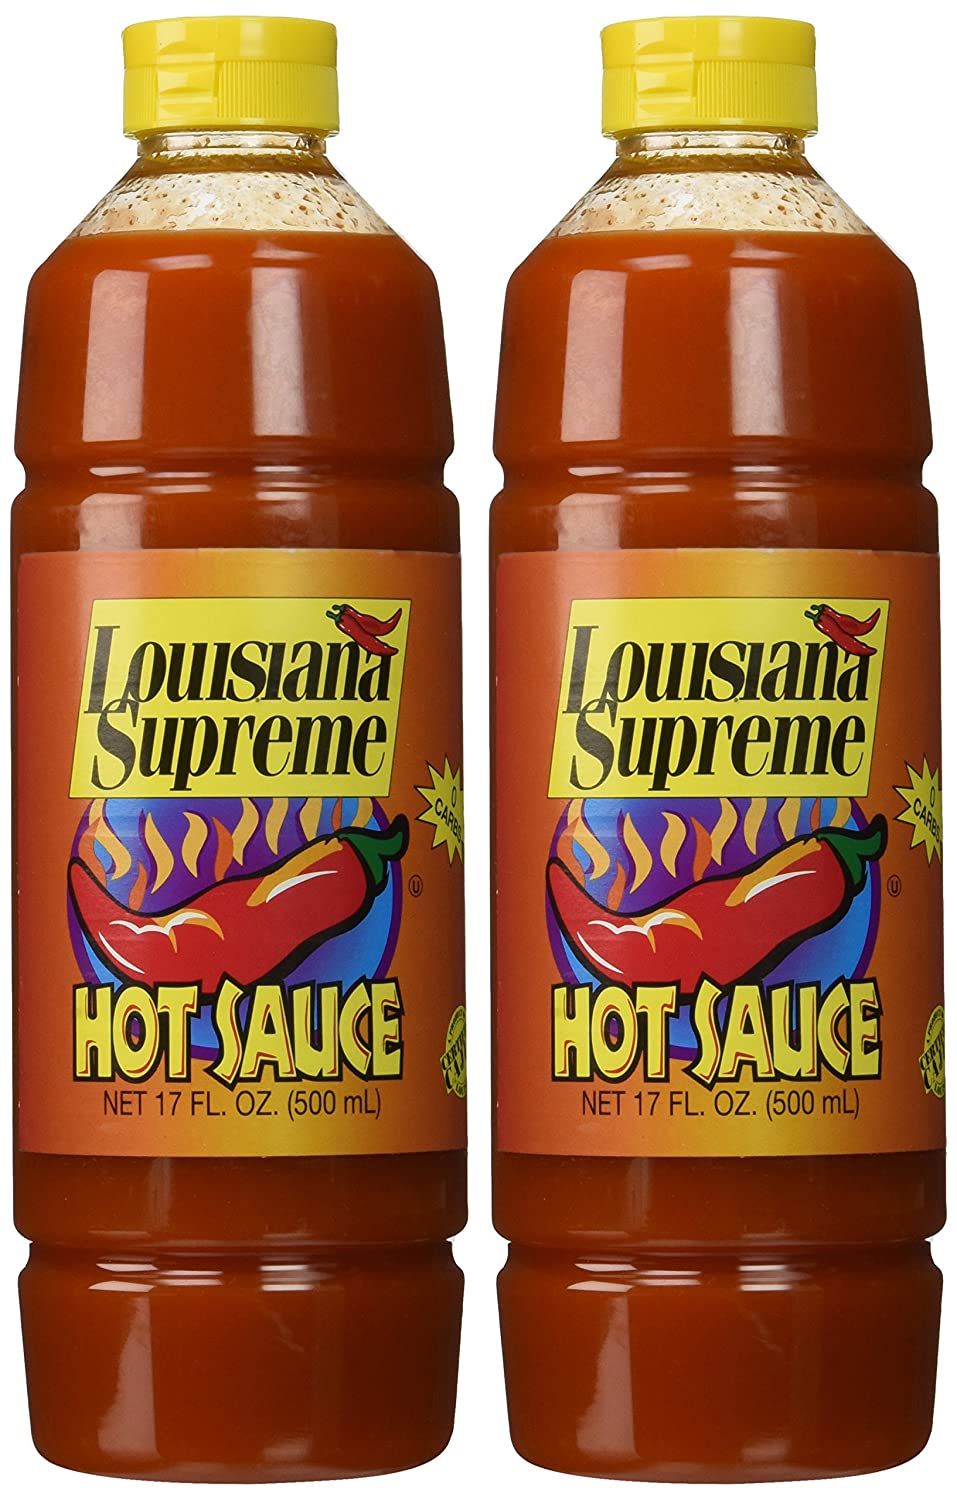 Louisiana Supreme Hot Sauce AD by davidmedrano - Issuu